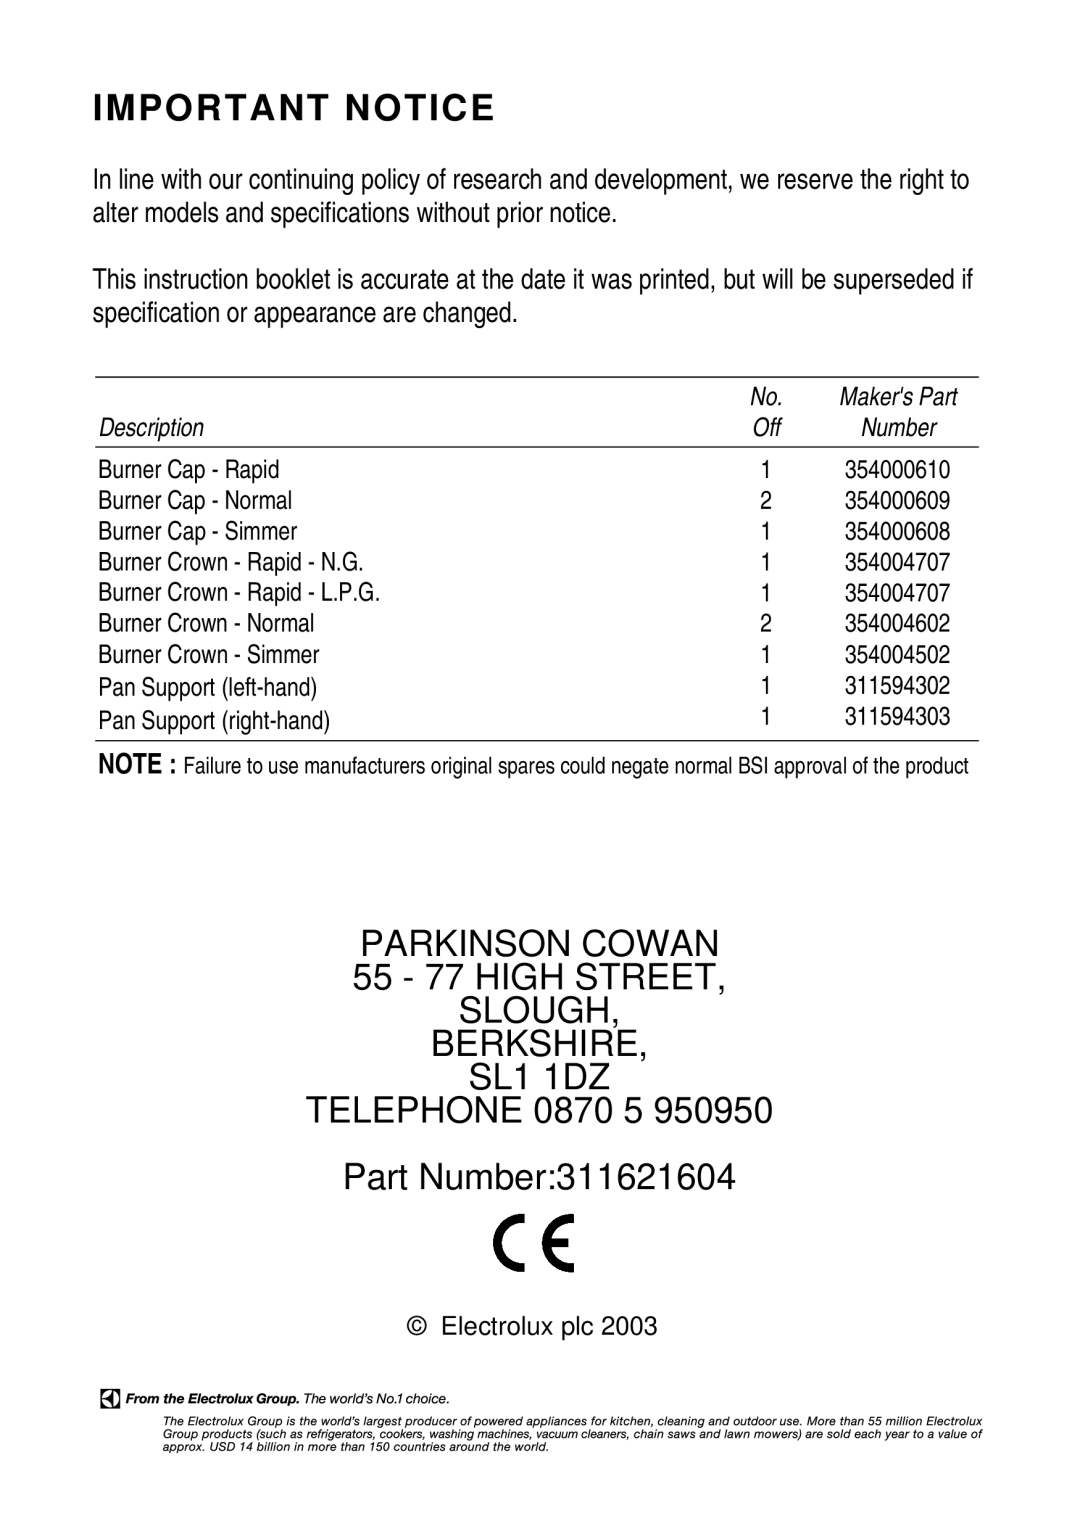 Parkinson Cowan SIG 554 Important Notice, PARKINSON COWAN 55 - 77 HIGH STREET SLOUGH BERKSHIRE SL1 1DZ 